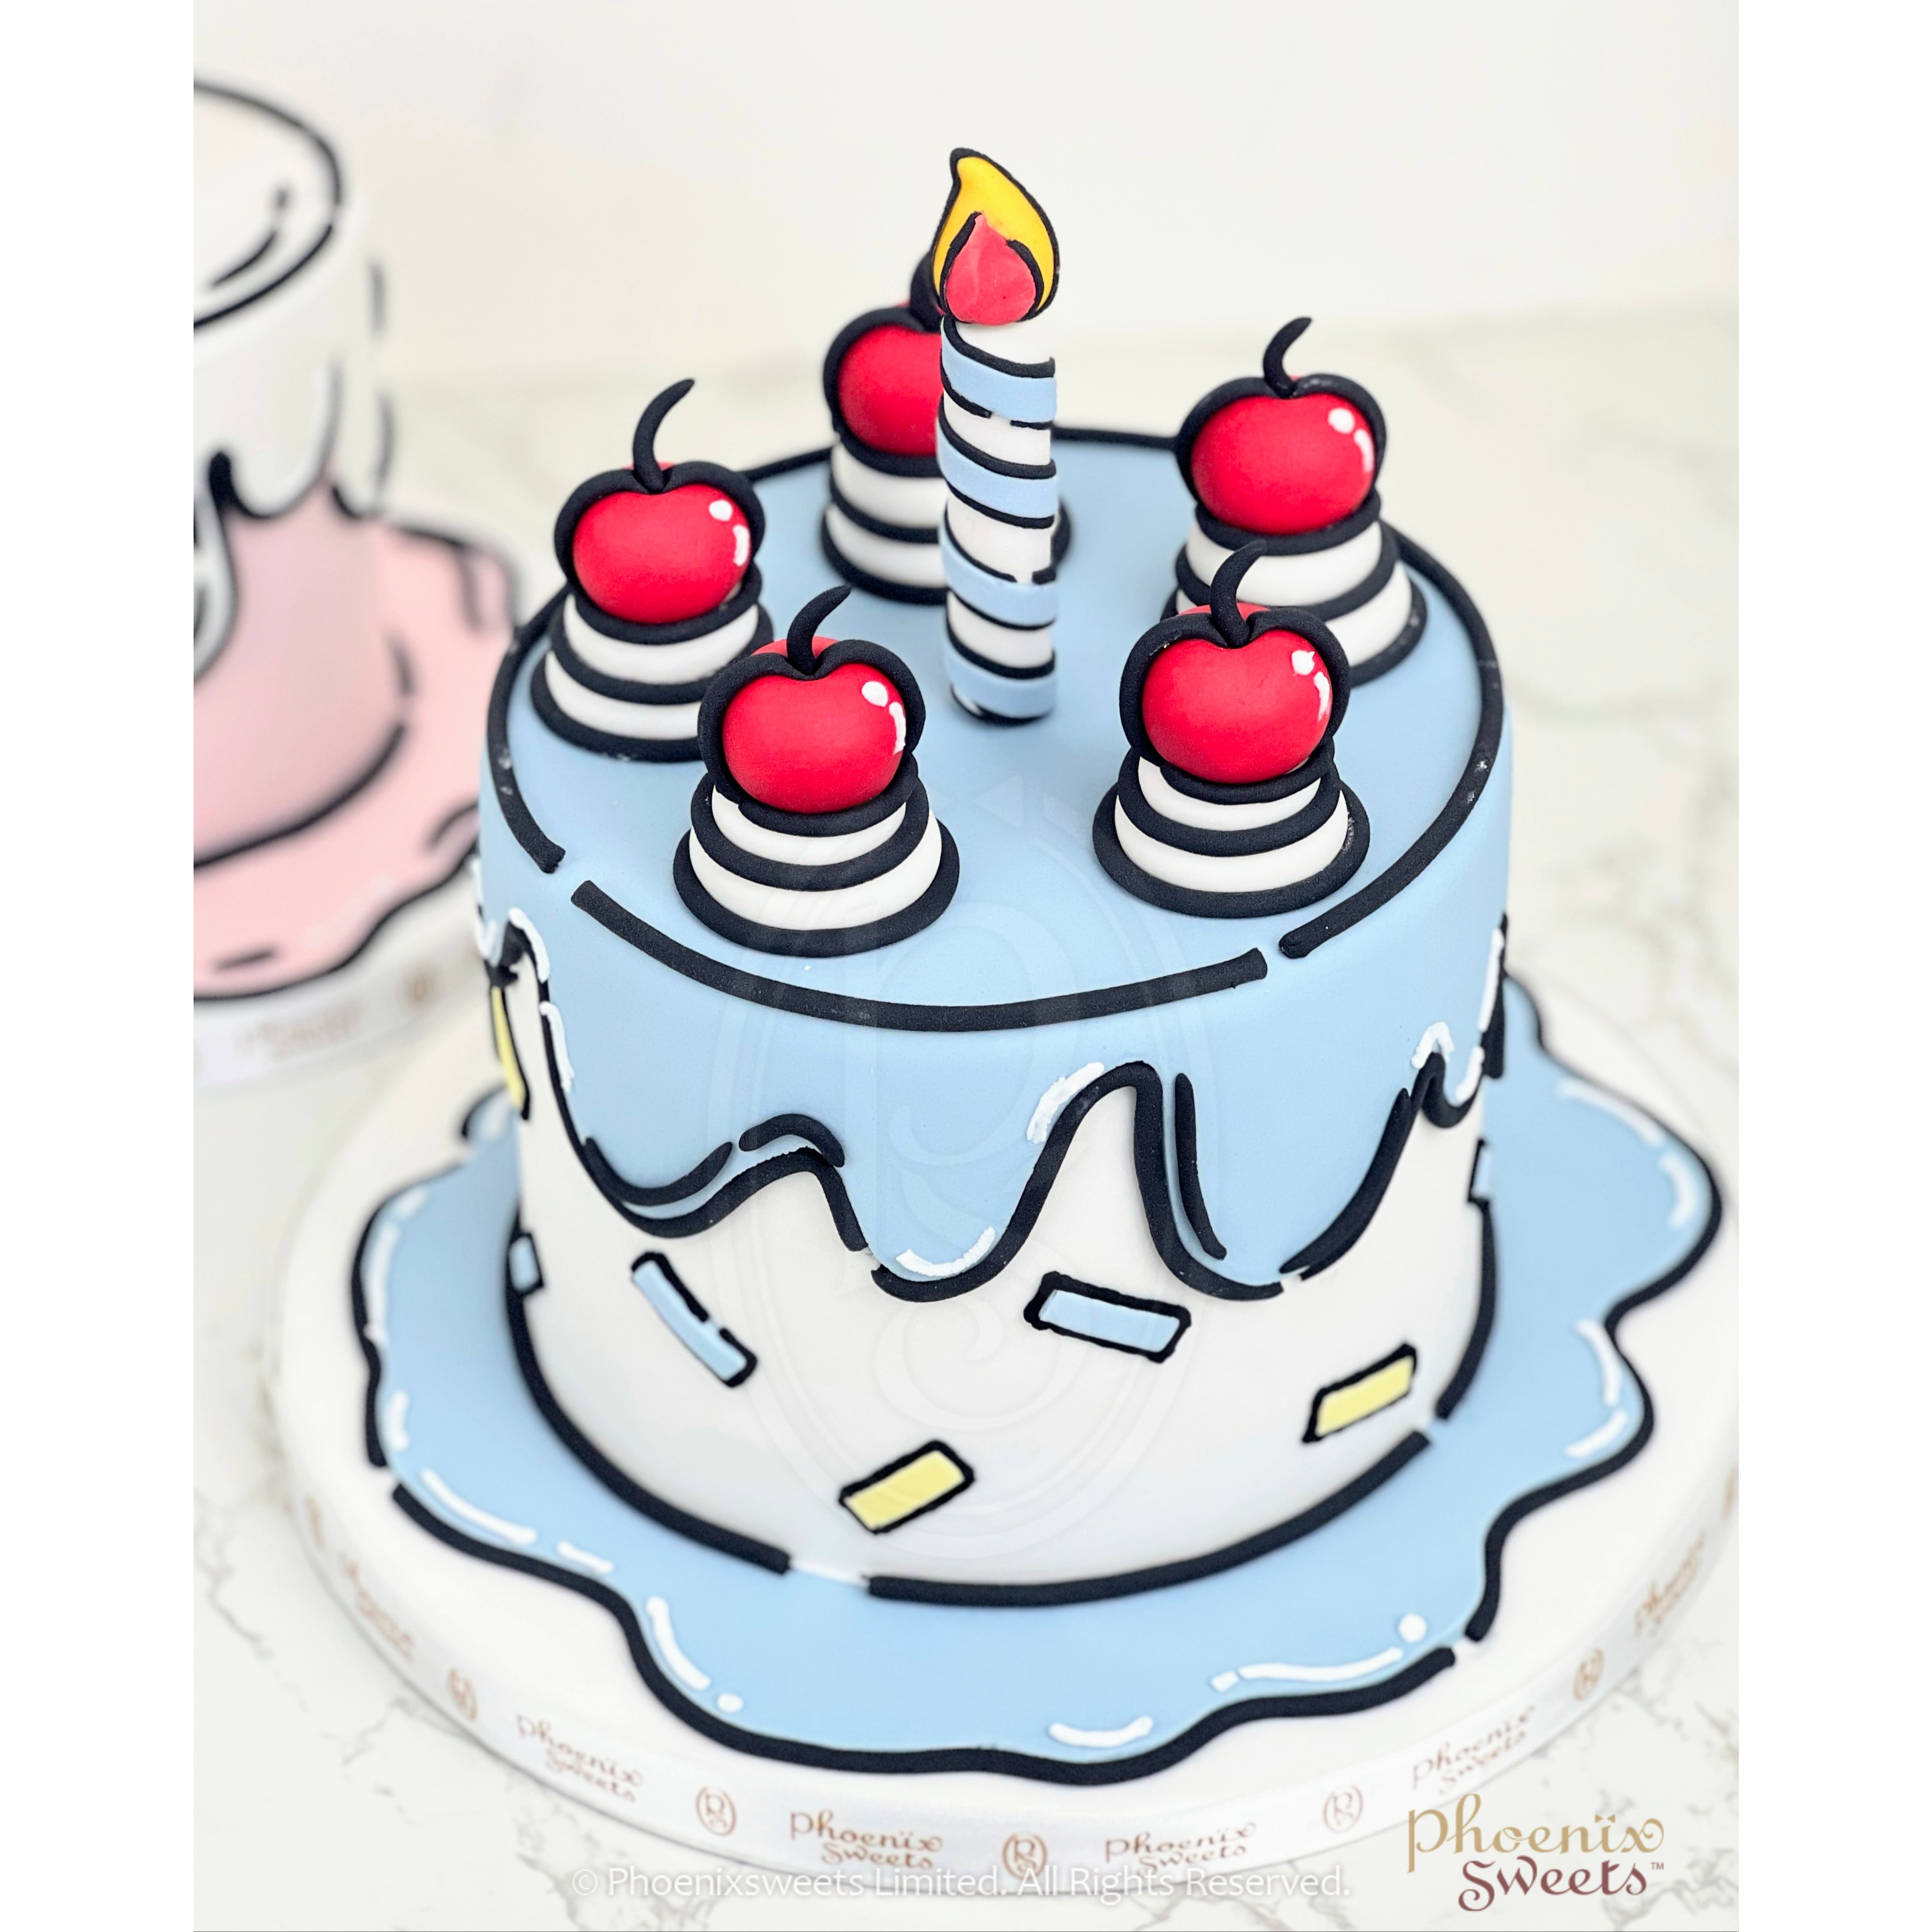 Amazing Comic/Cartoon cake ideas for your future events | Cartoon cake,  Xmas cake, Christmas cake designs